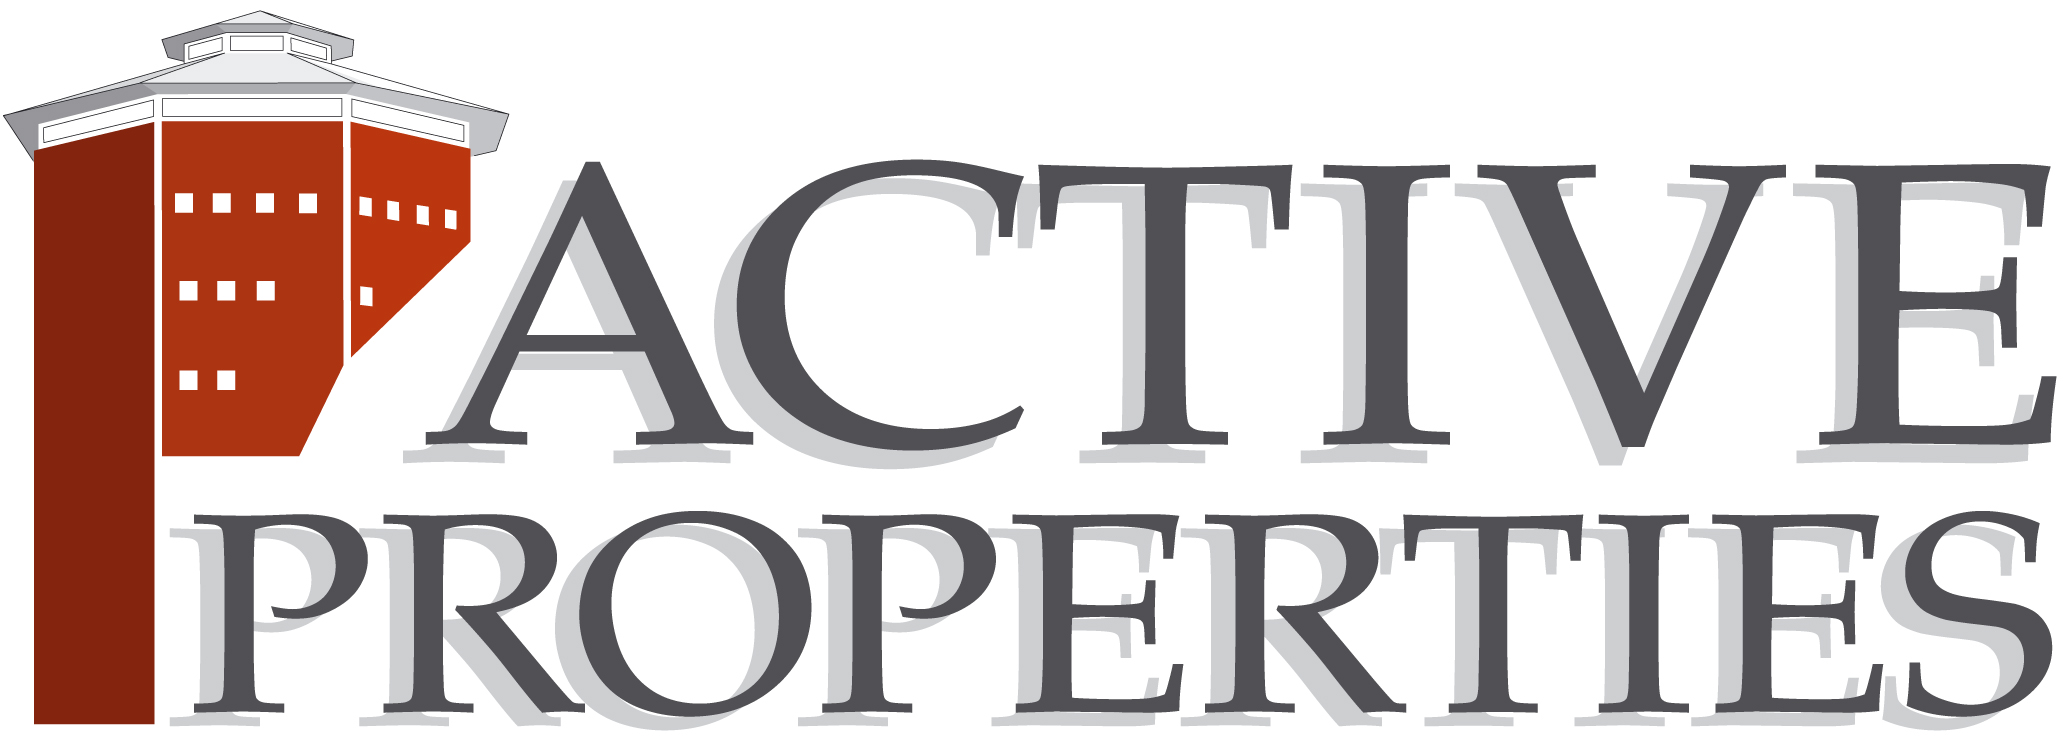 Active Properties A logo image